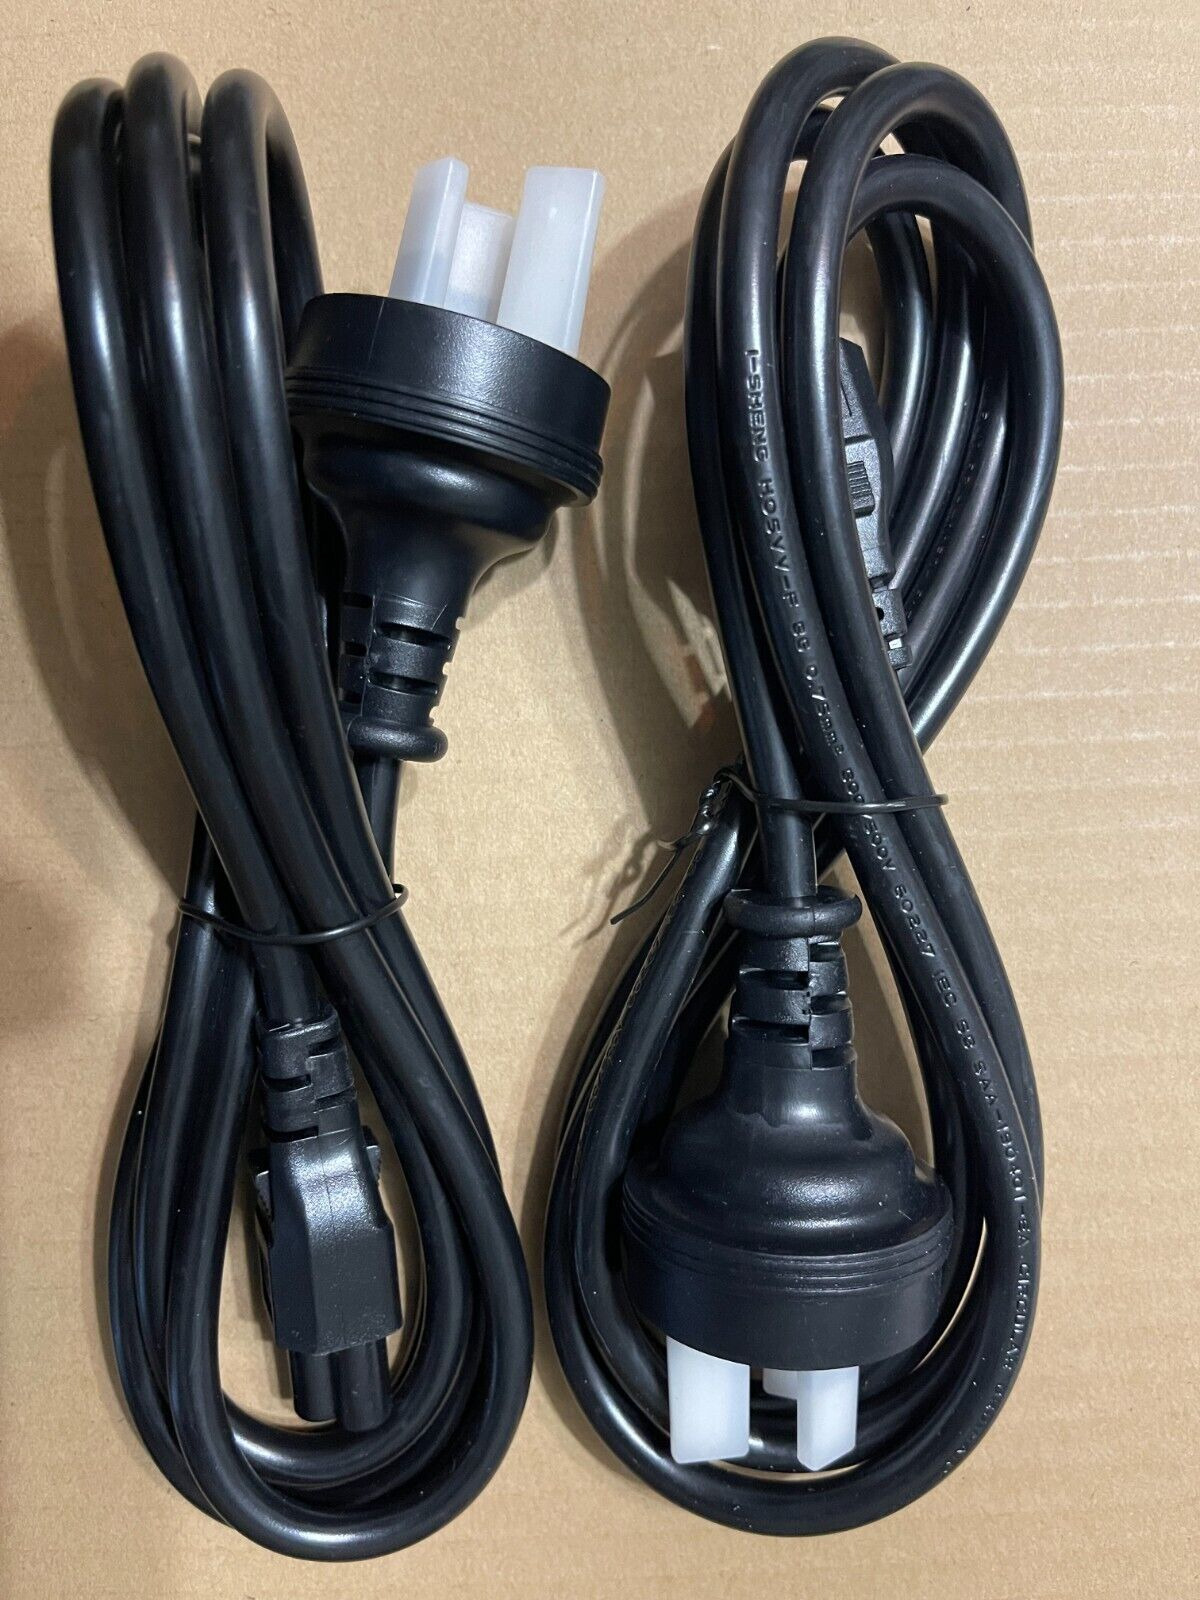 New I-Sheng Q88071 SP-502b 10A 250V Power Cord- 2 pack